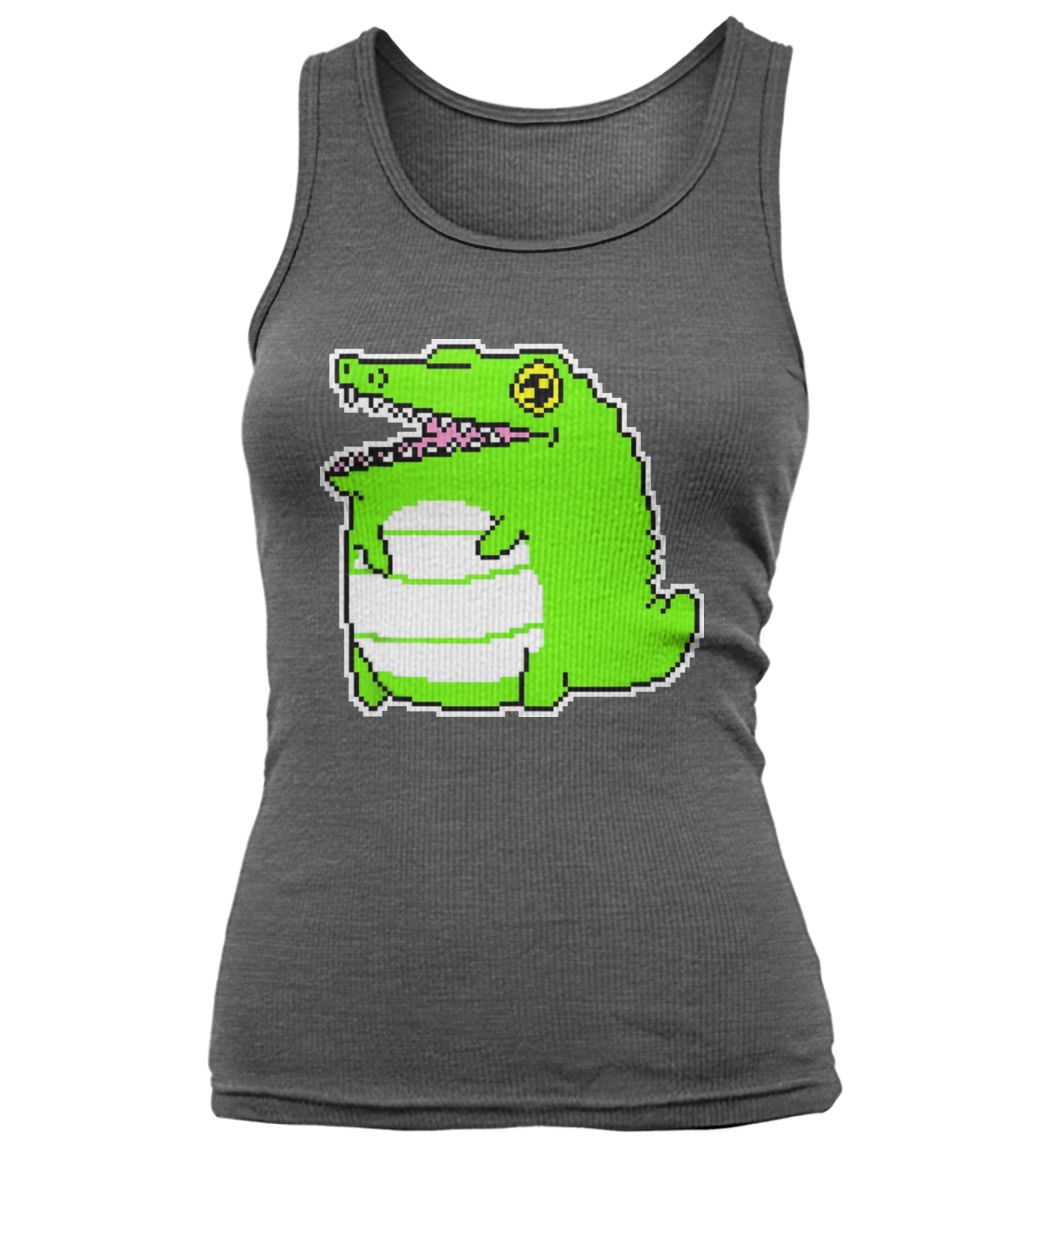 Green cartoon crocodile women's tank top